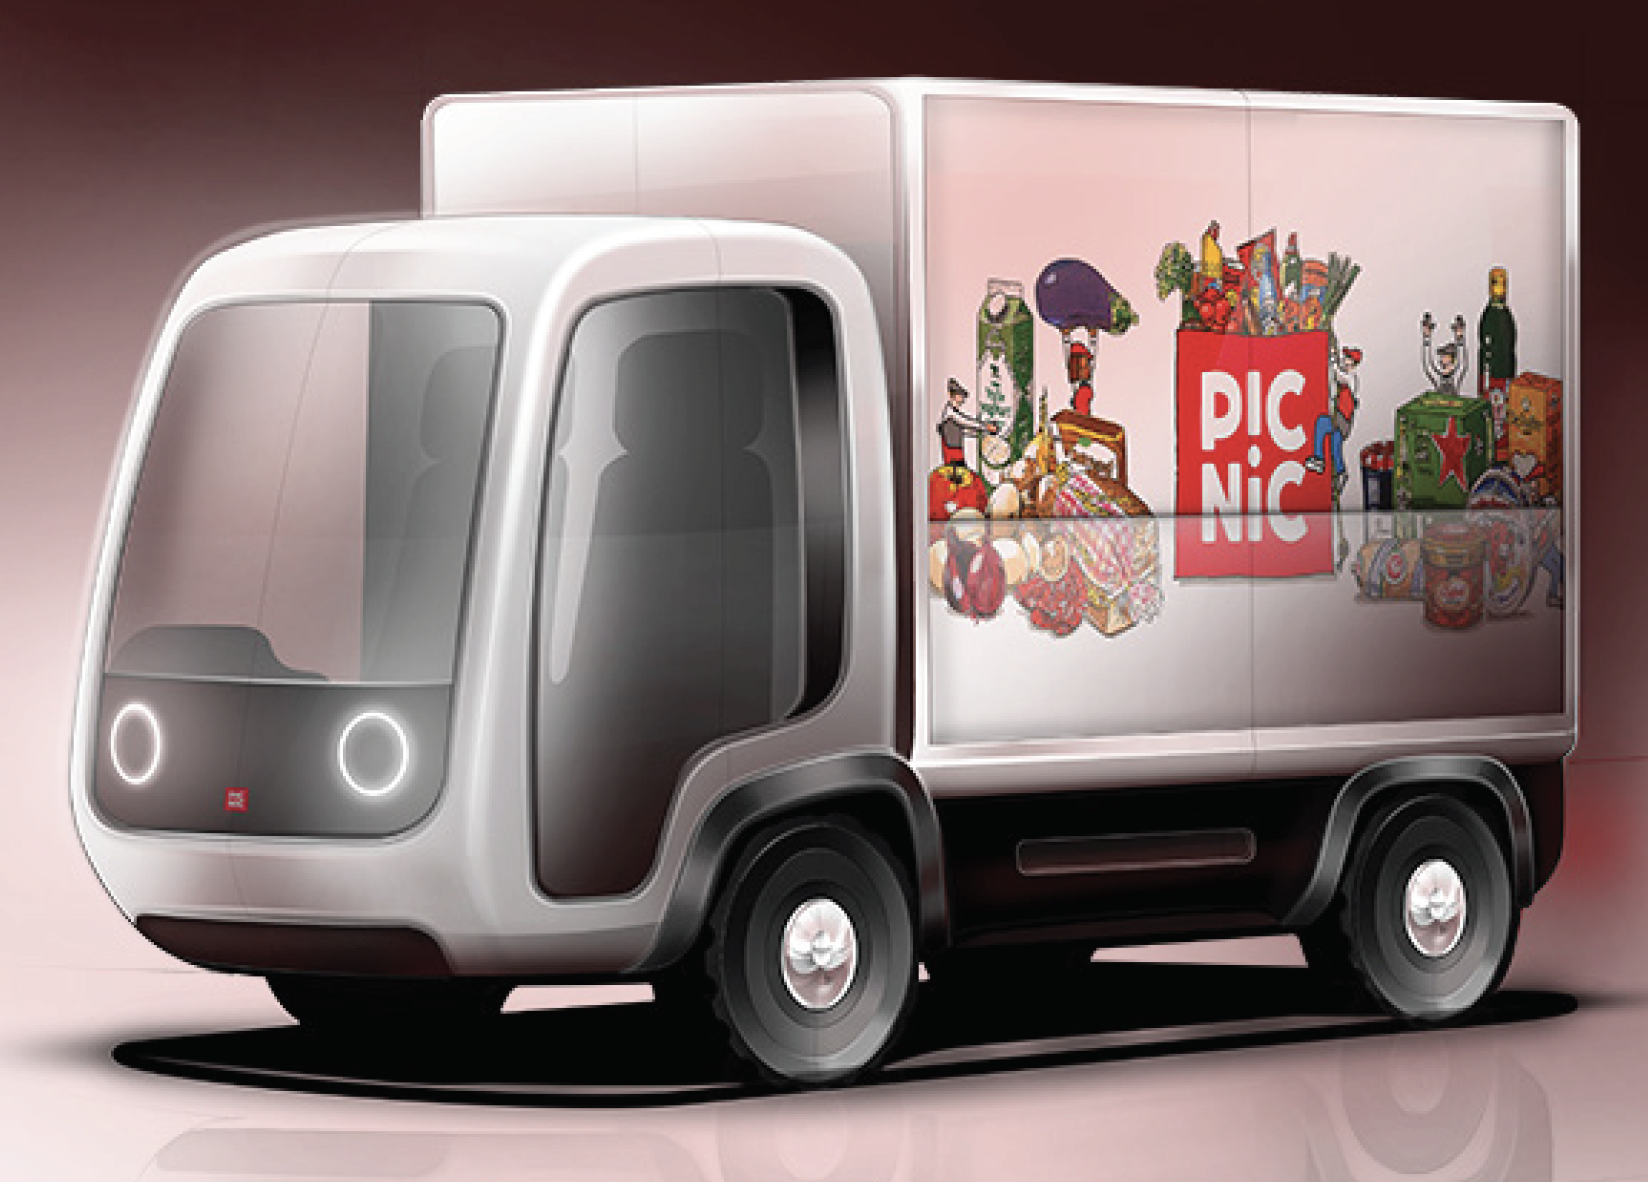 dump Ellendig Chirurgie Designing a new last-mile delivery vehicle for Picnic – CityLogistics